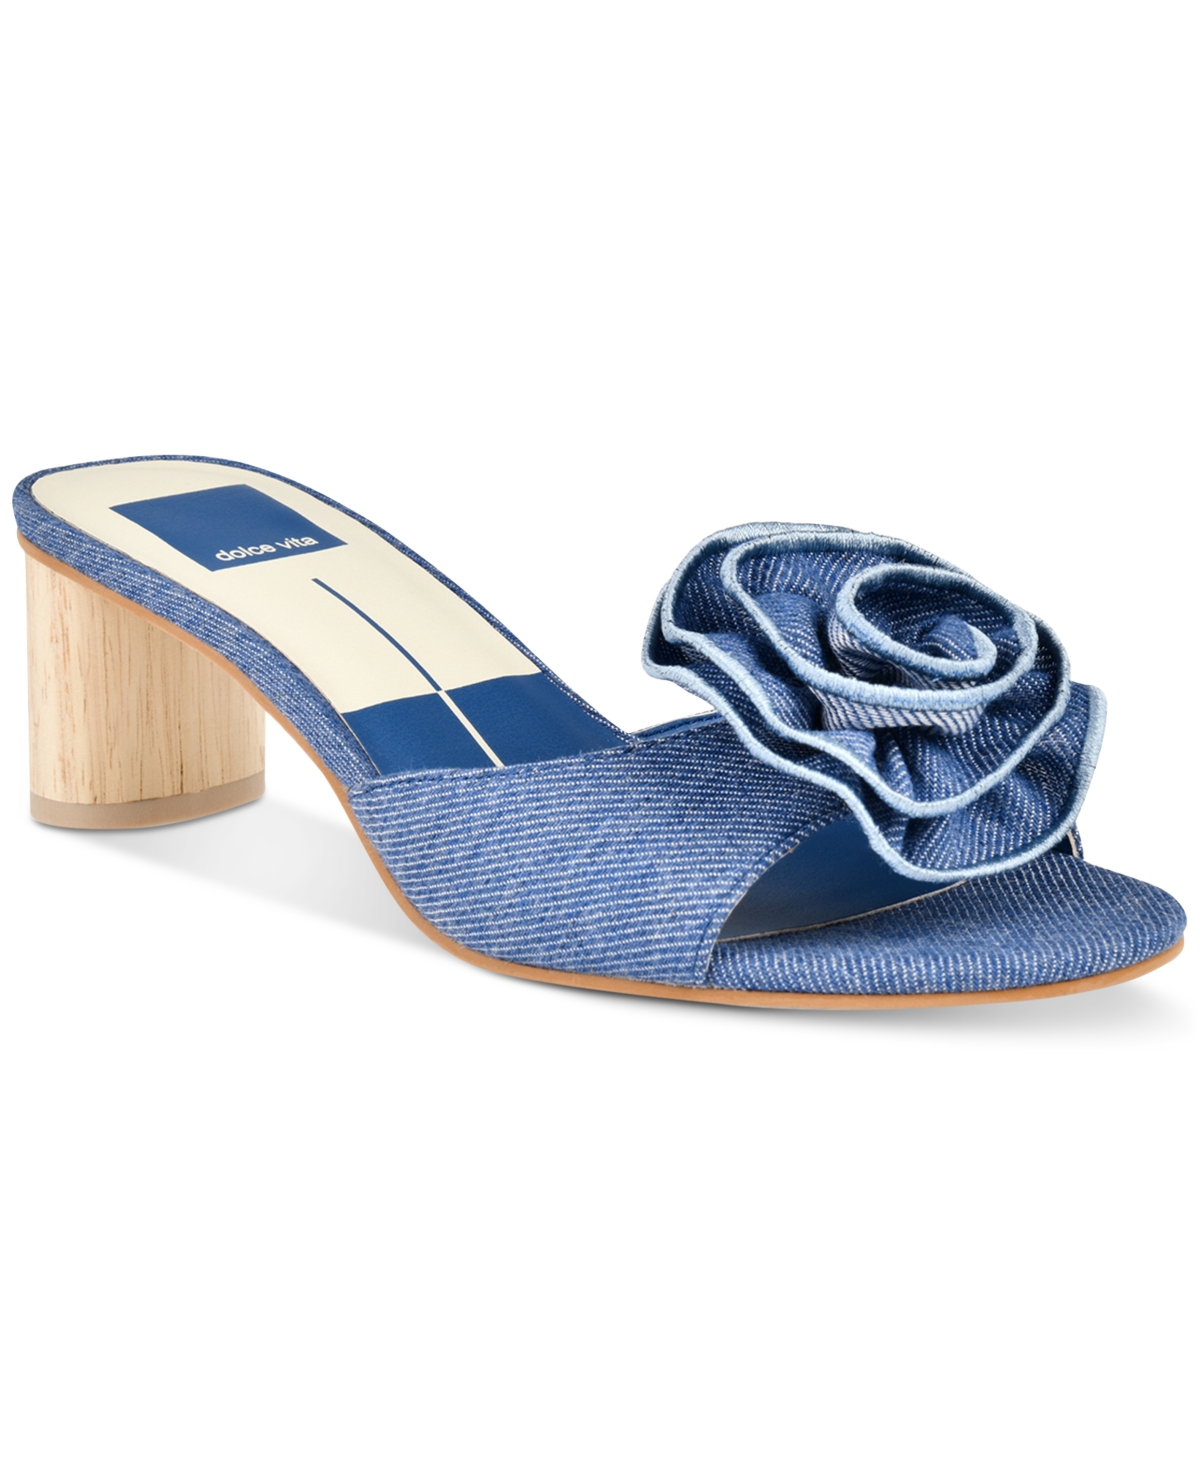 Women's Darly Floral Detailed Block-Heel Dress Sandals - Blue Denim